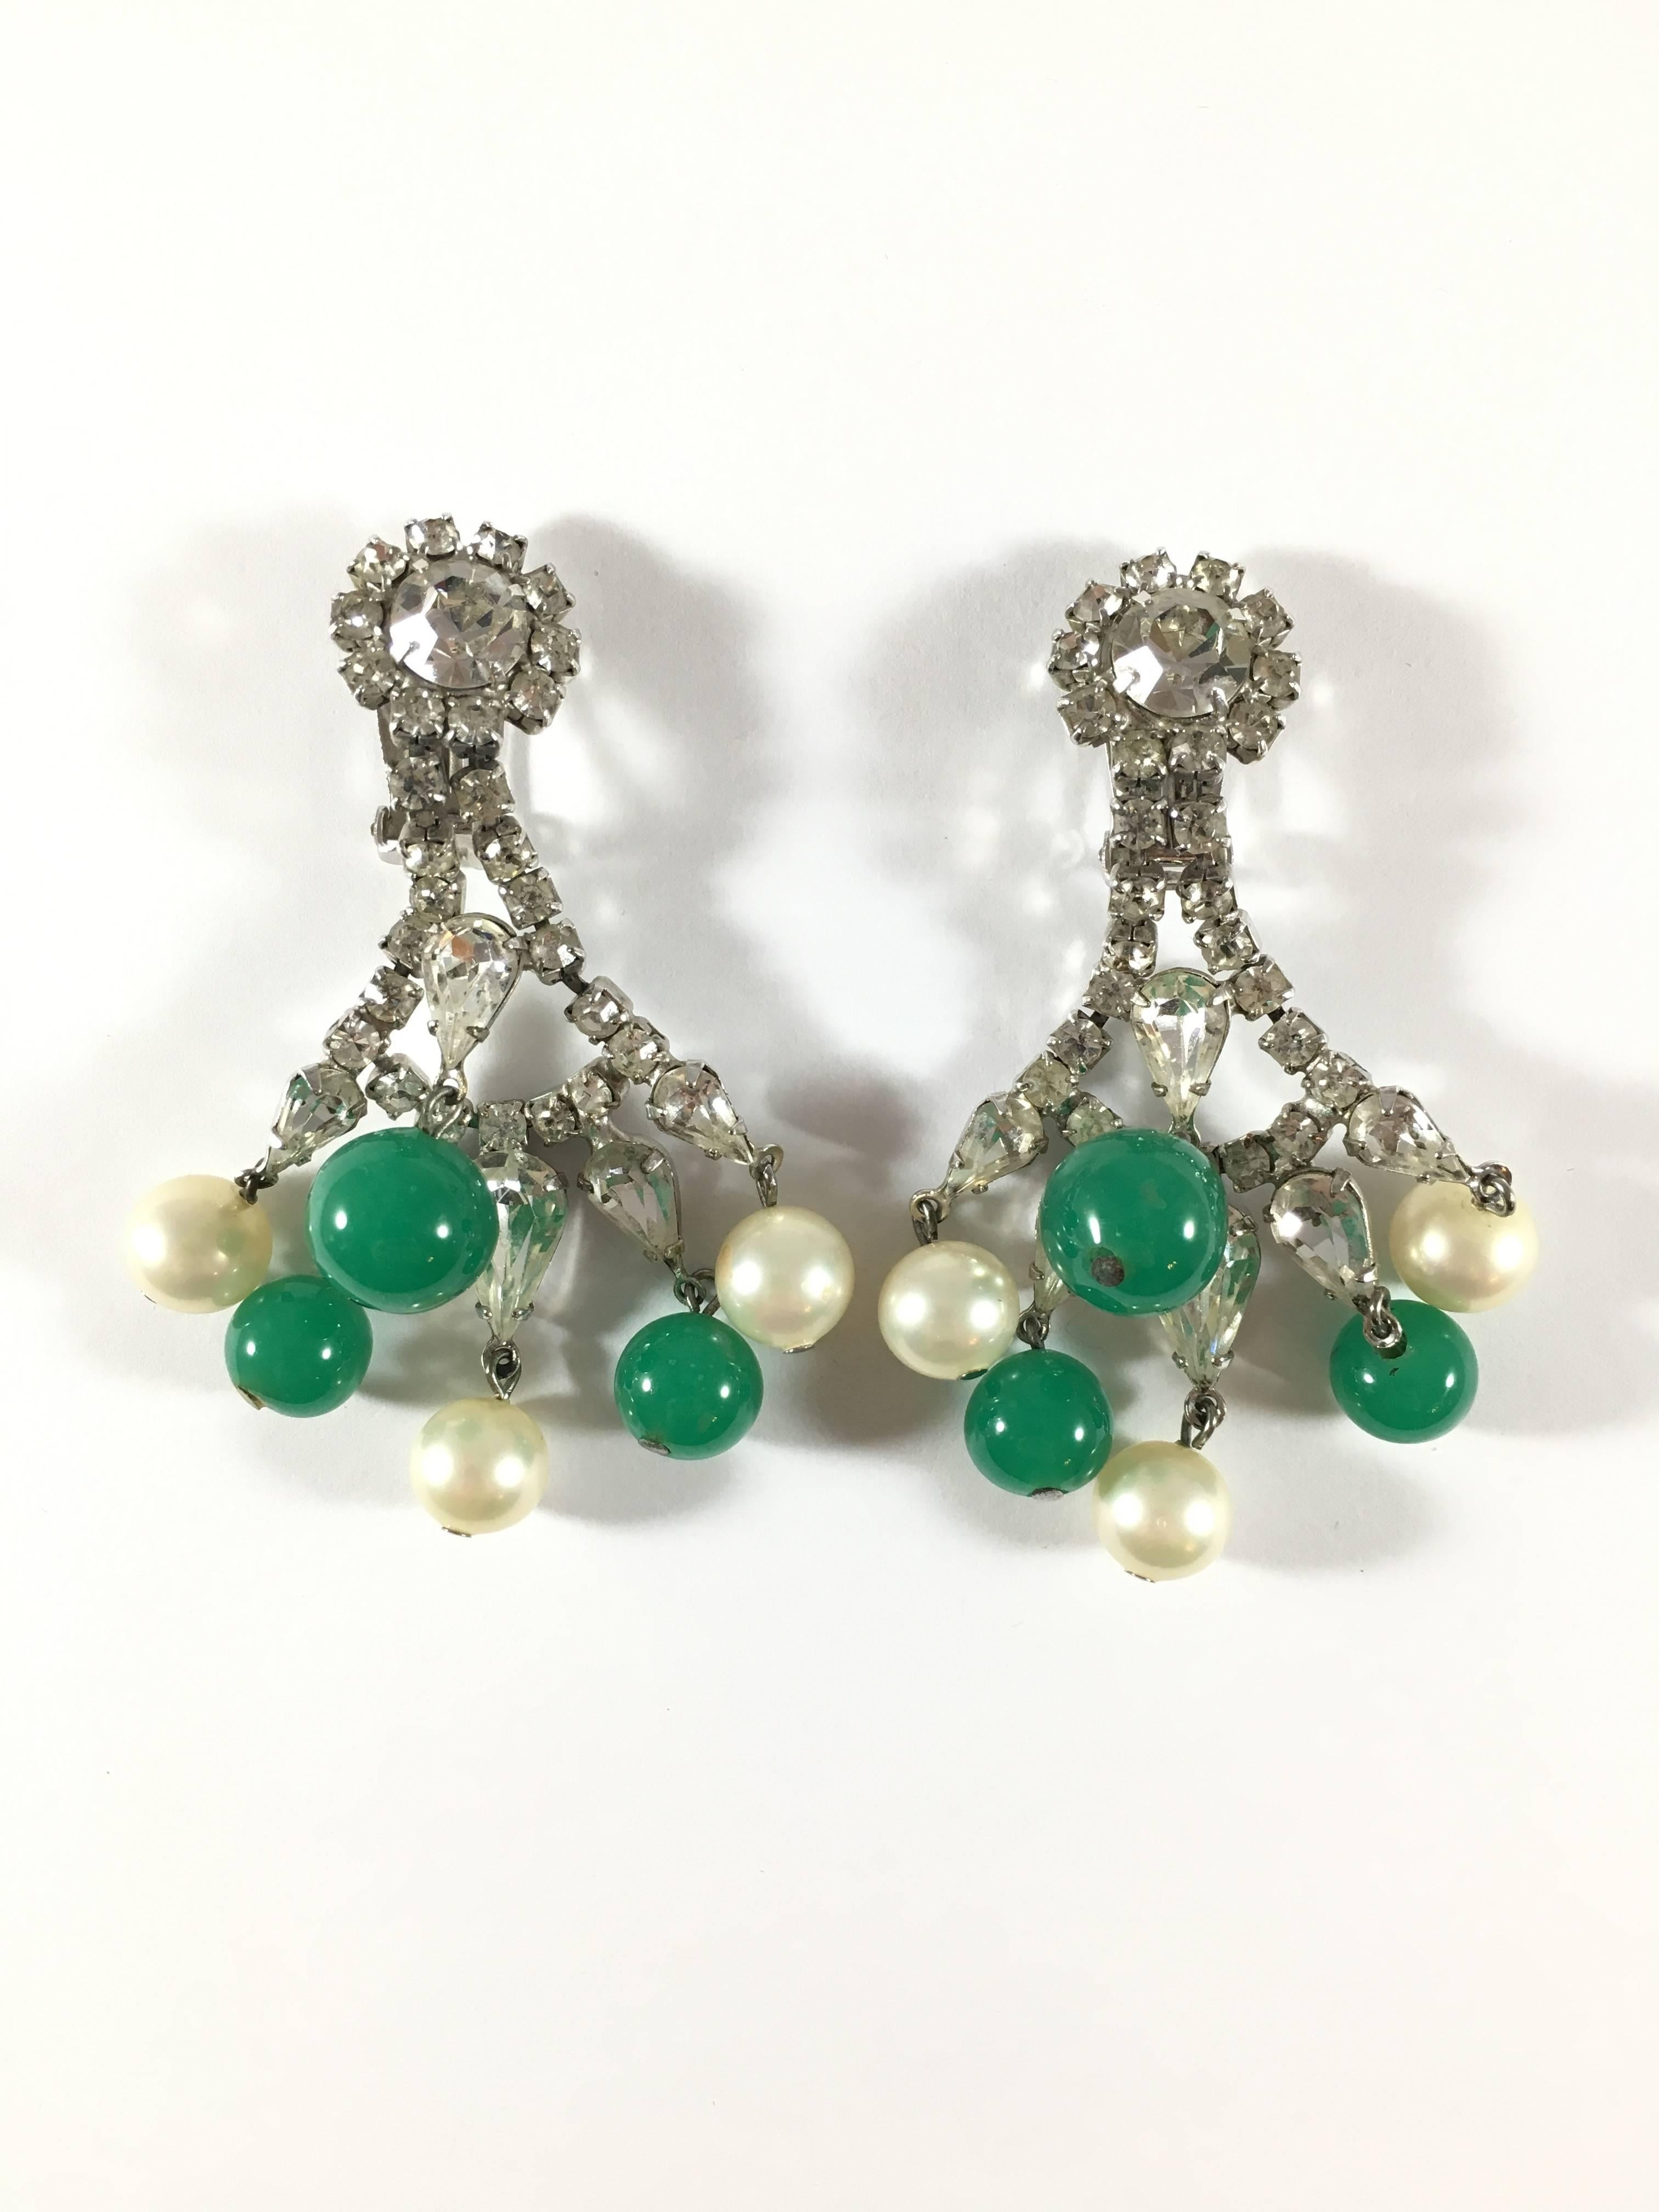 Women's Hattie Carnegie 60s Chandelier Earrings with Rhinestones, Pearls and Emeralds For Sale